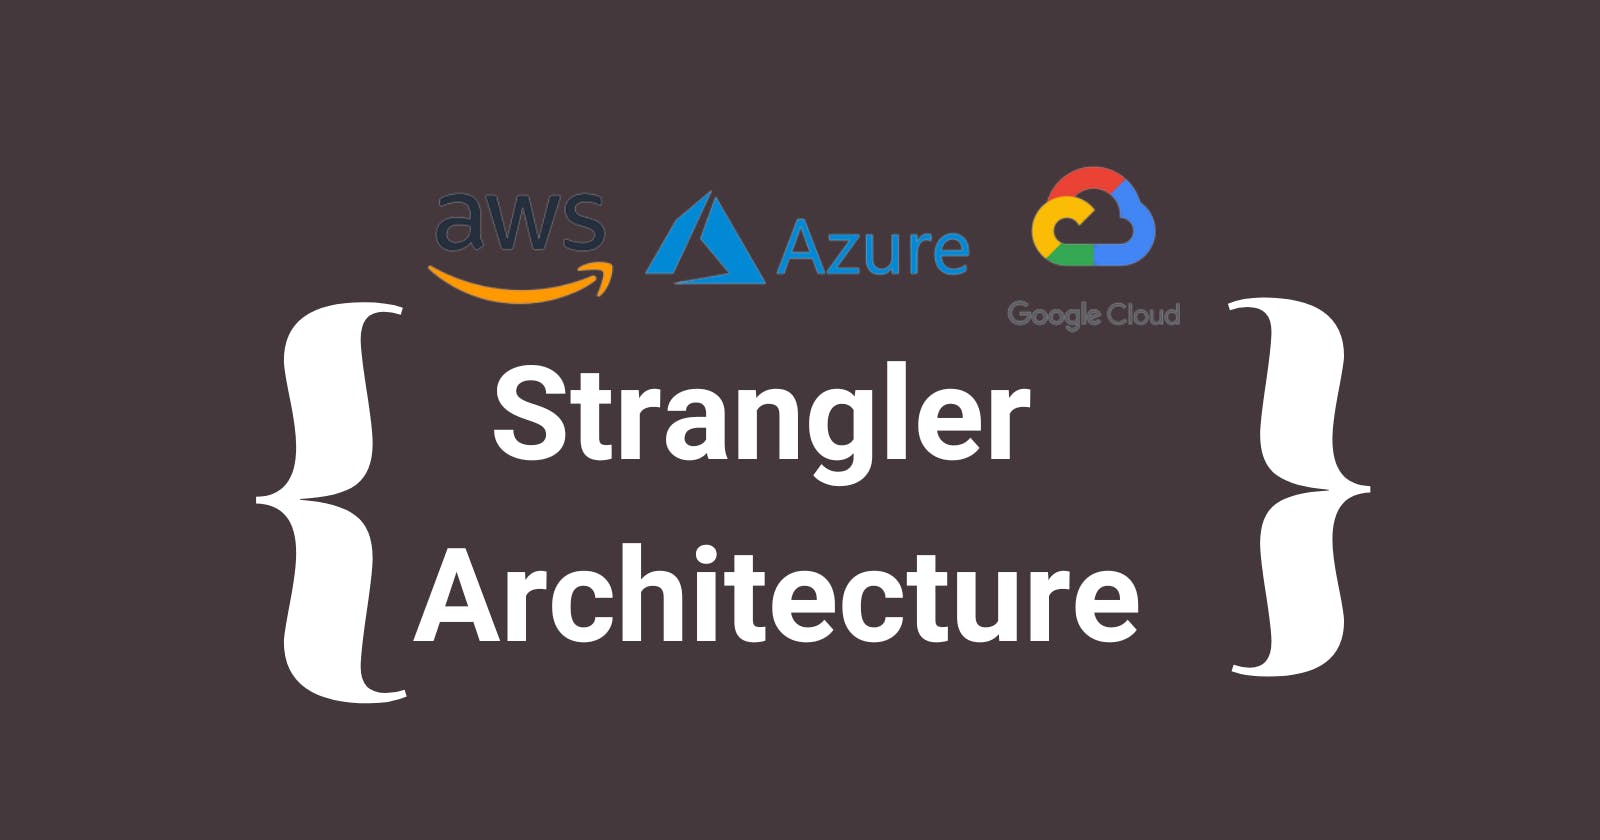 Strangler Architecture Design Pattern on AWS